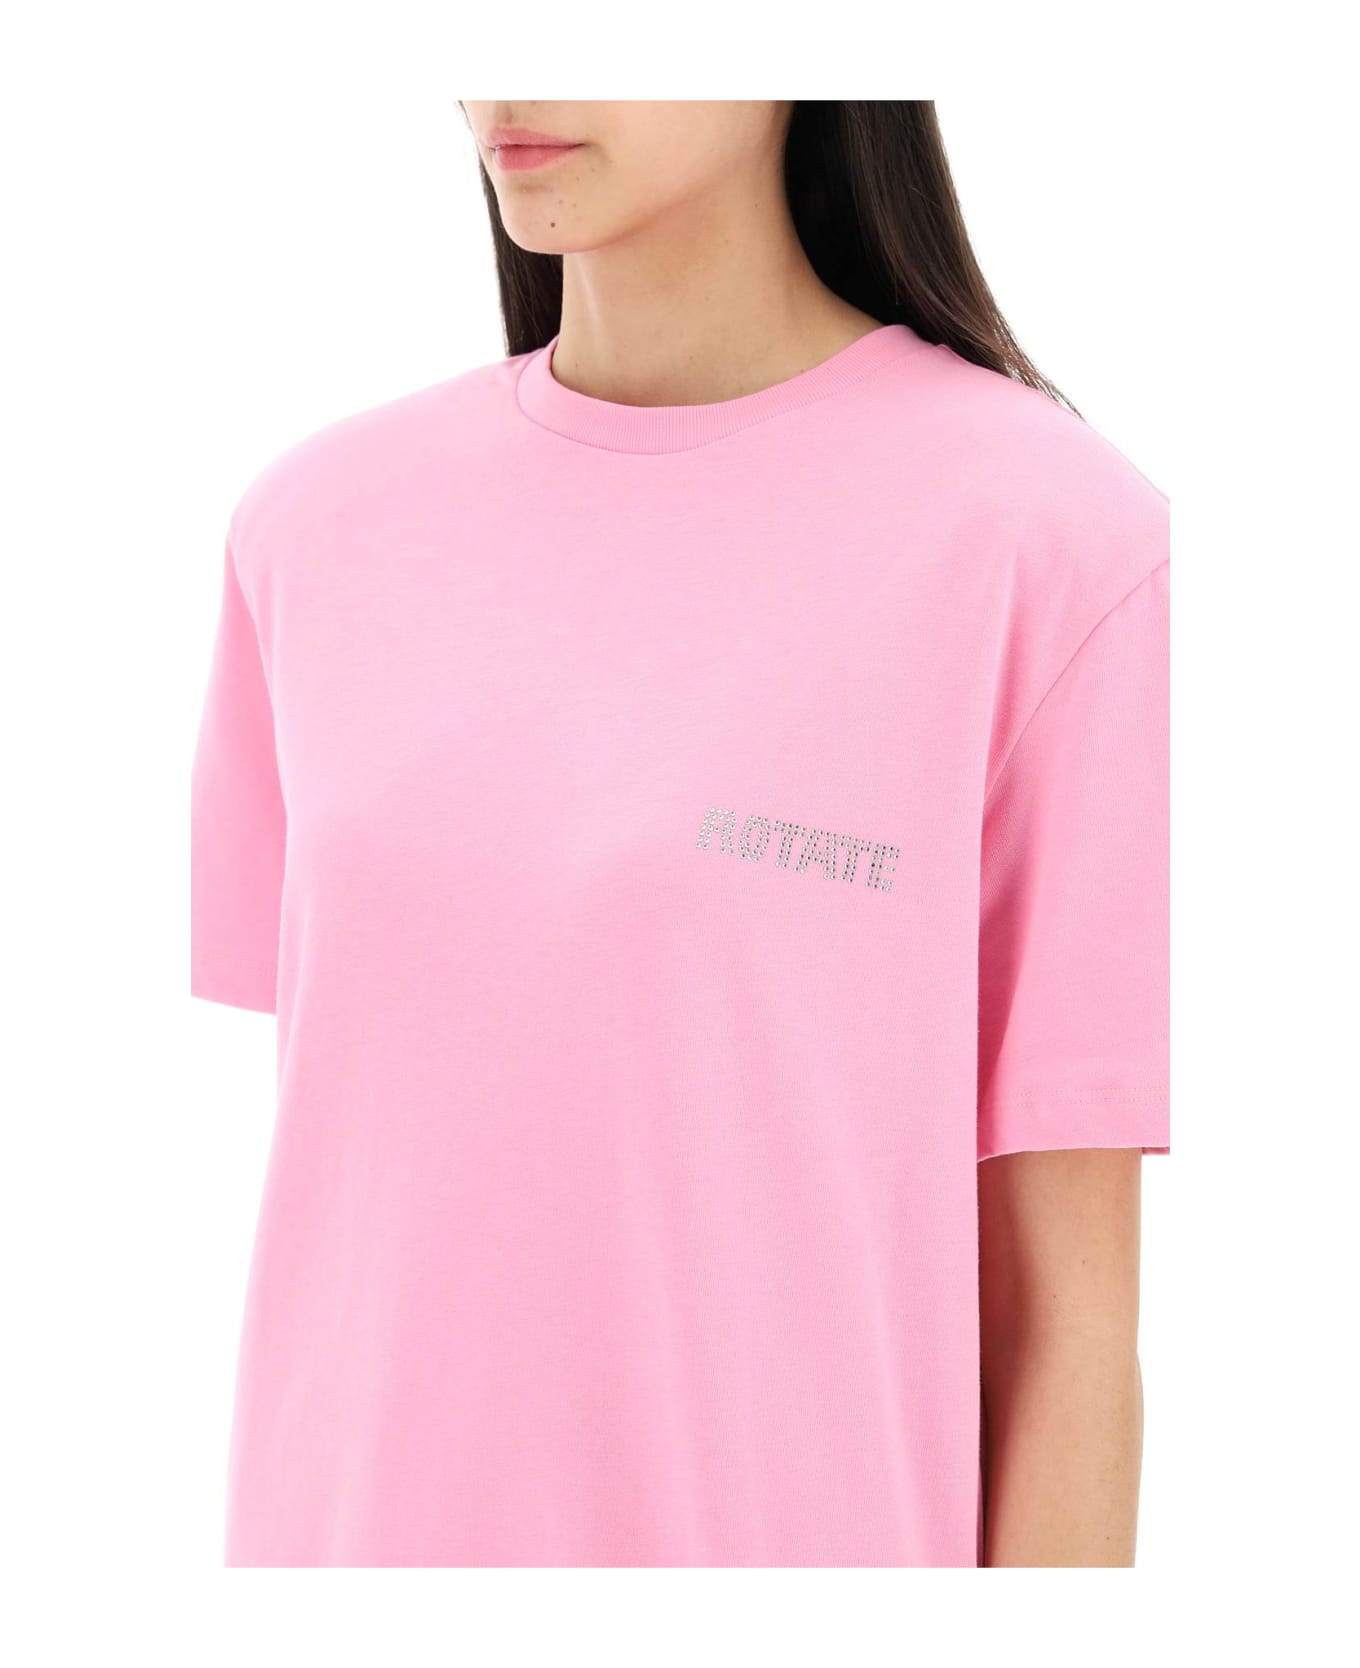 Rotate by Birger Christensen 'aja' Cotton T-shirt - BEGONIA PINK (Pink)